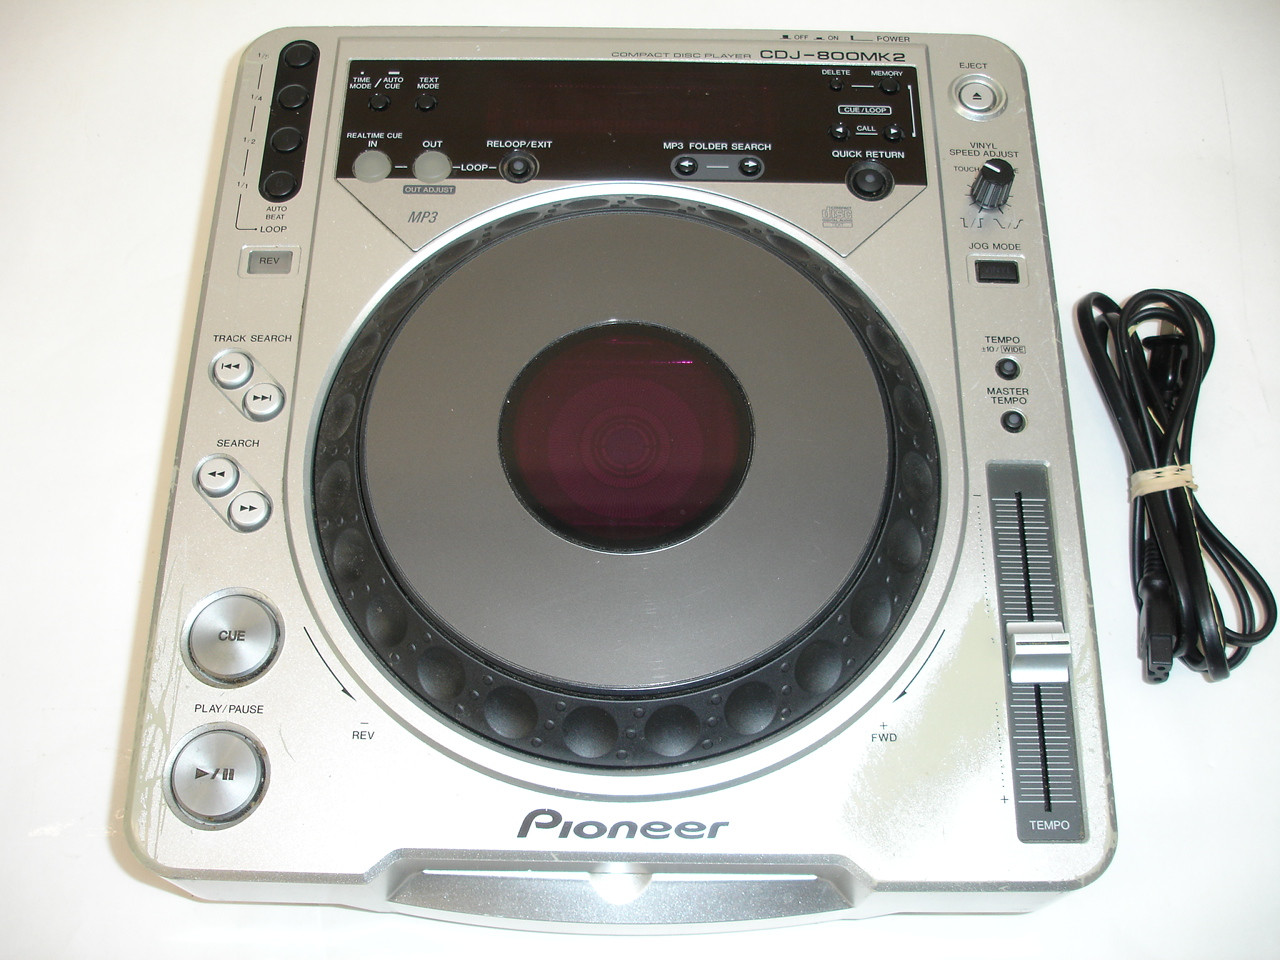 Pioneer CDJ-800MK2 - オーディオ機器